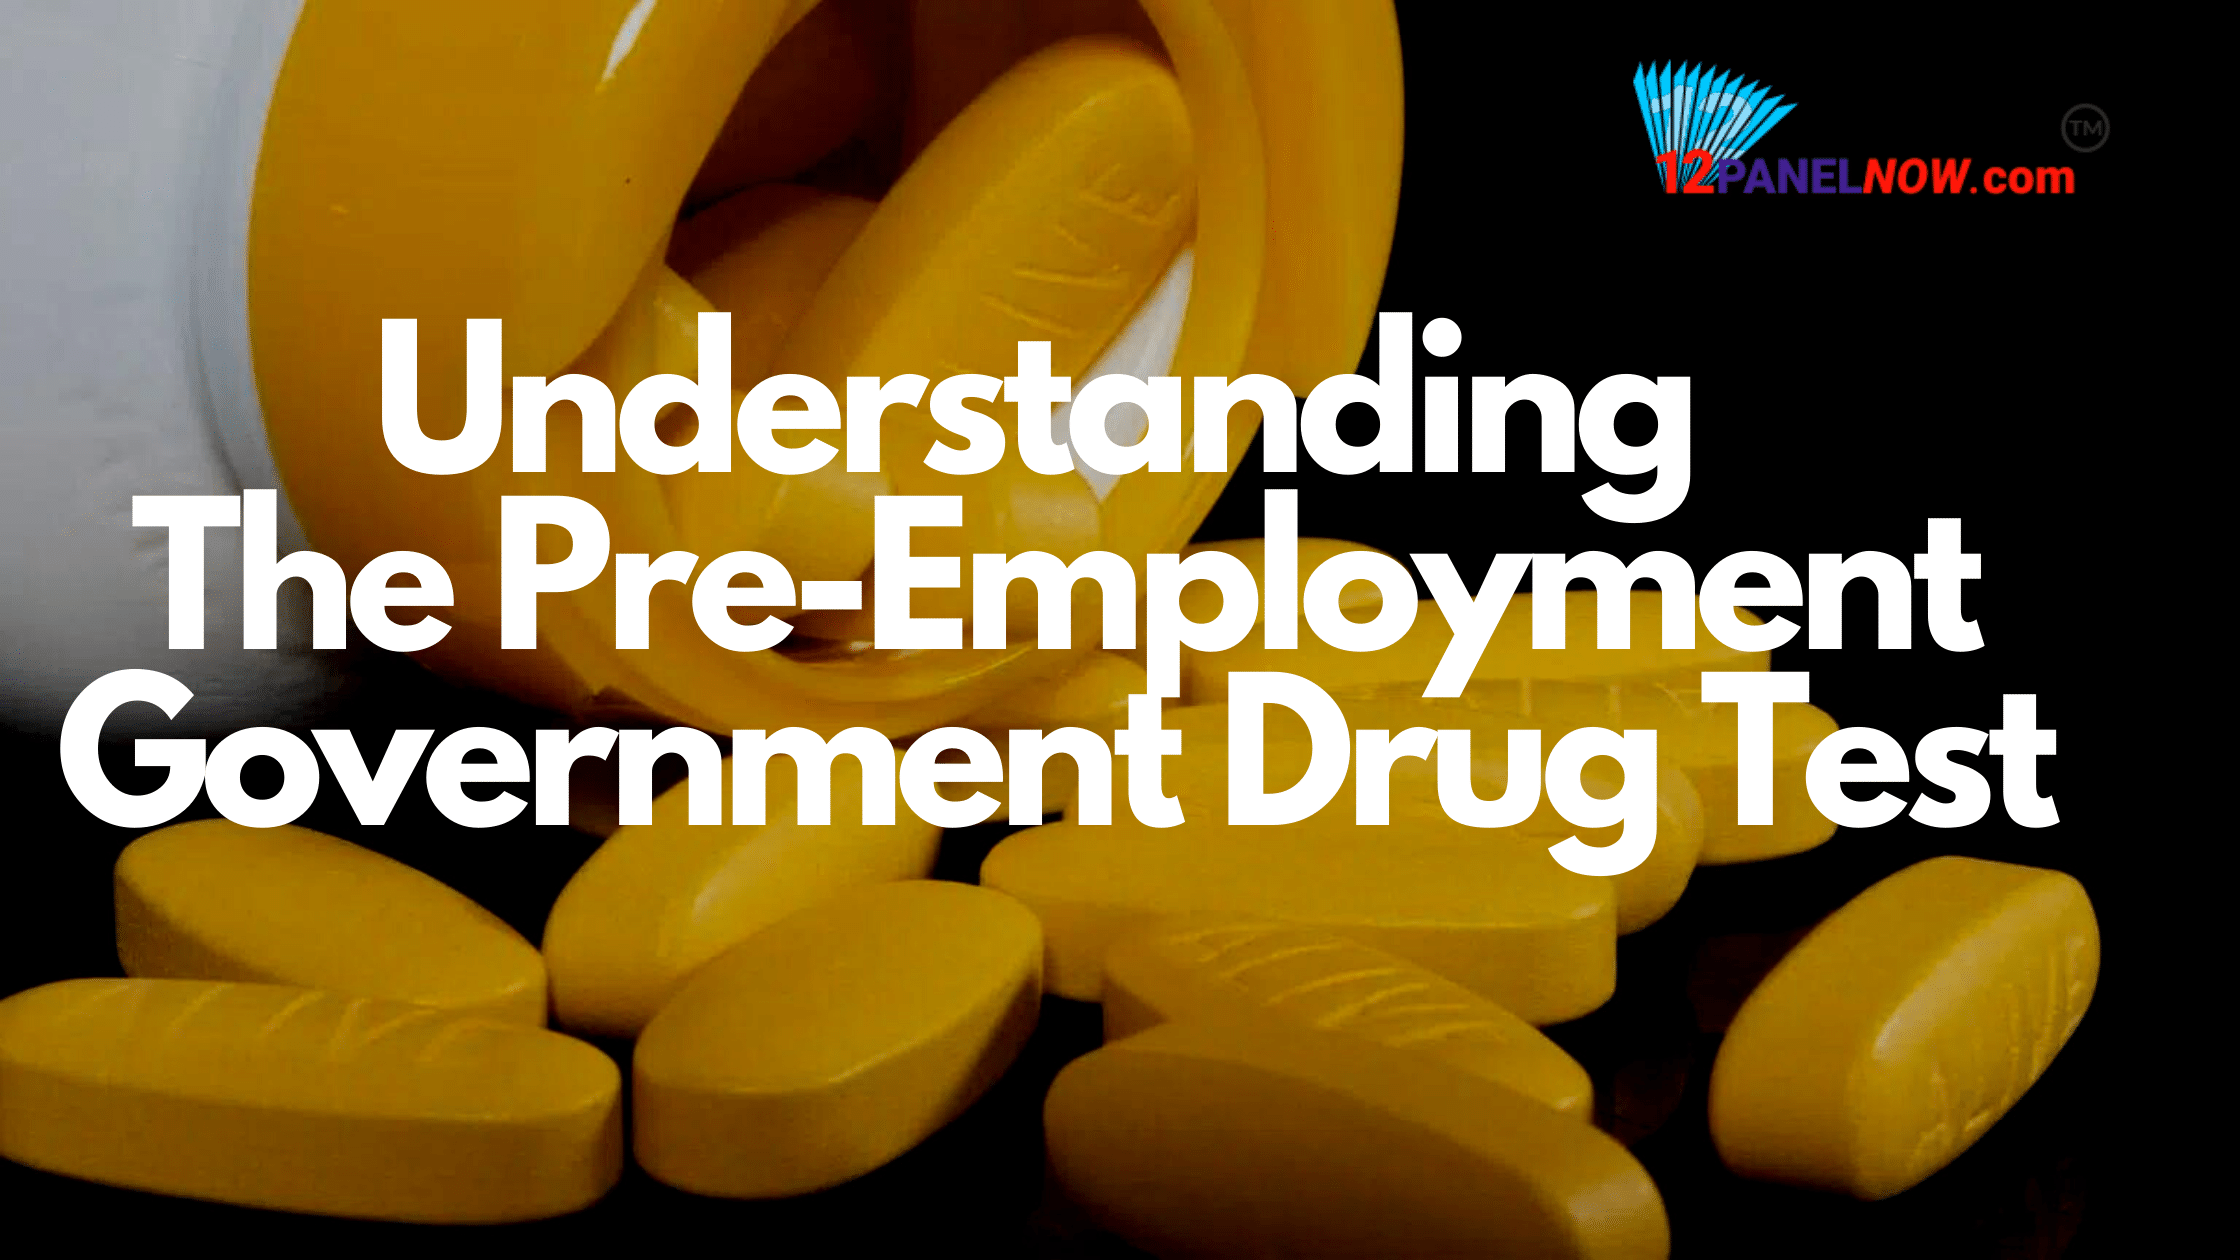 Pre-Employment Government Drug Test - 12PanelNow